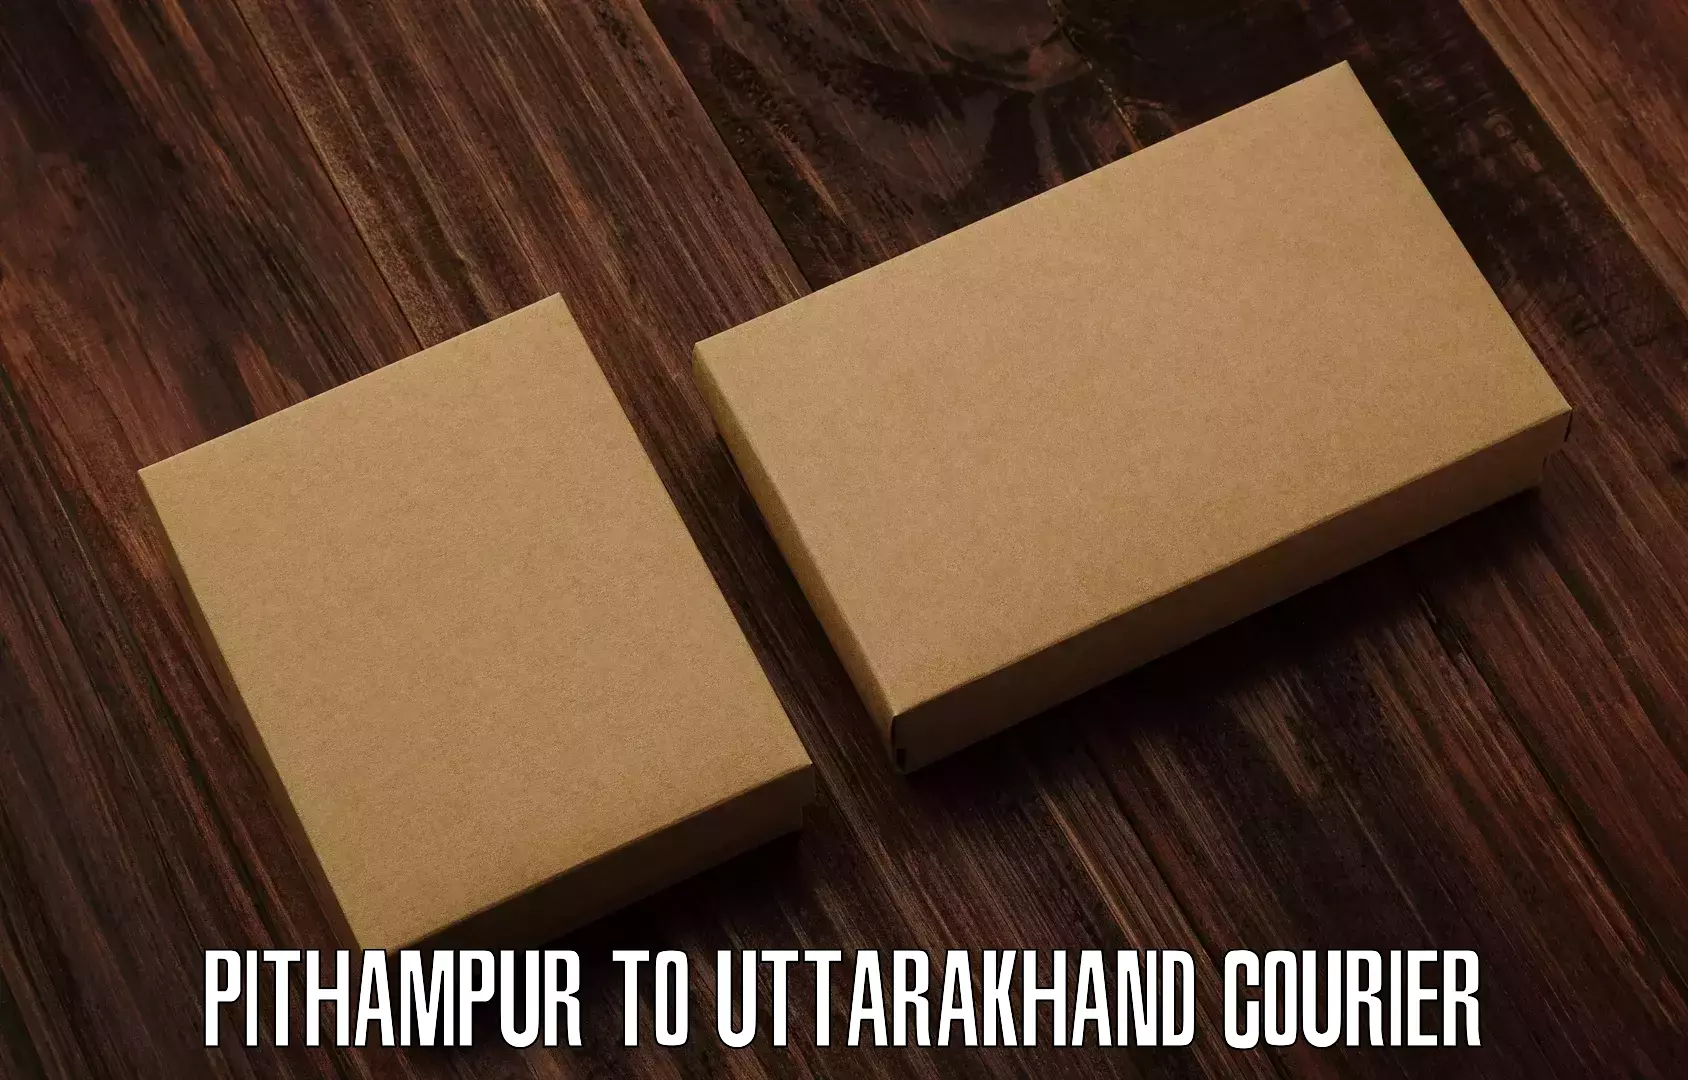 Express logistics providers Pithampur to Uttarakhand